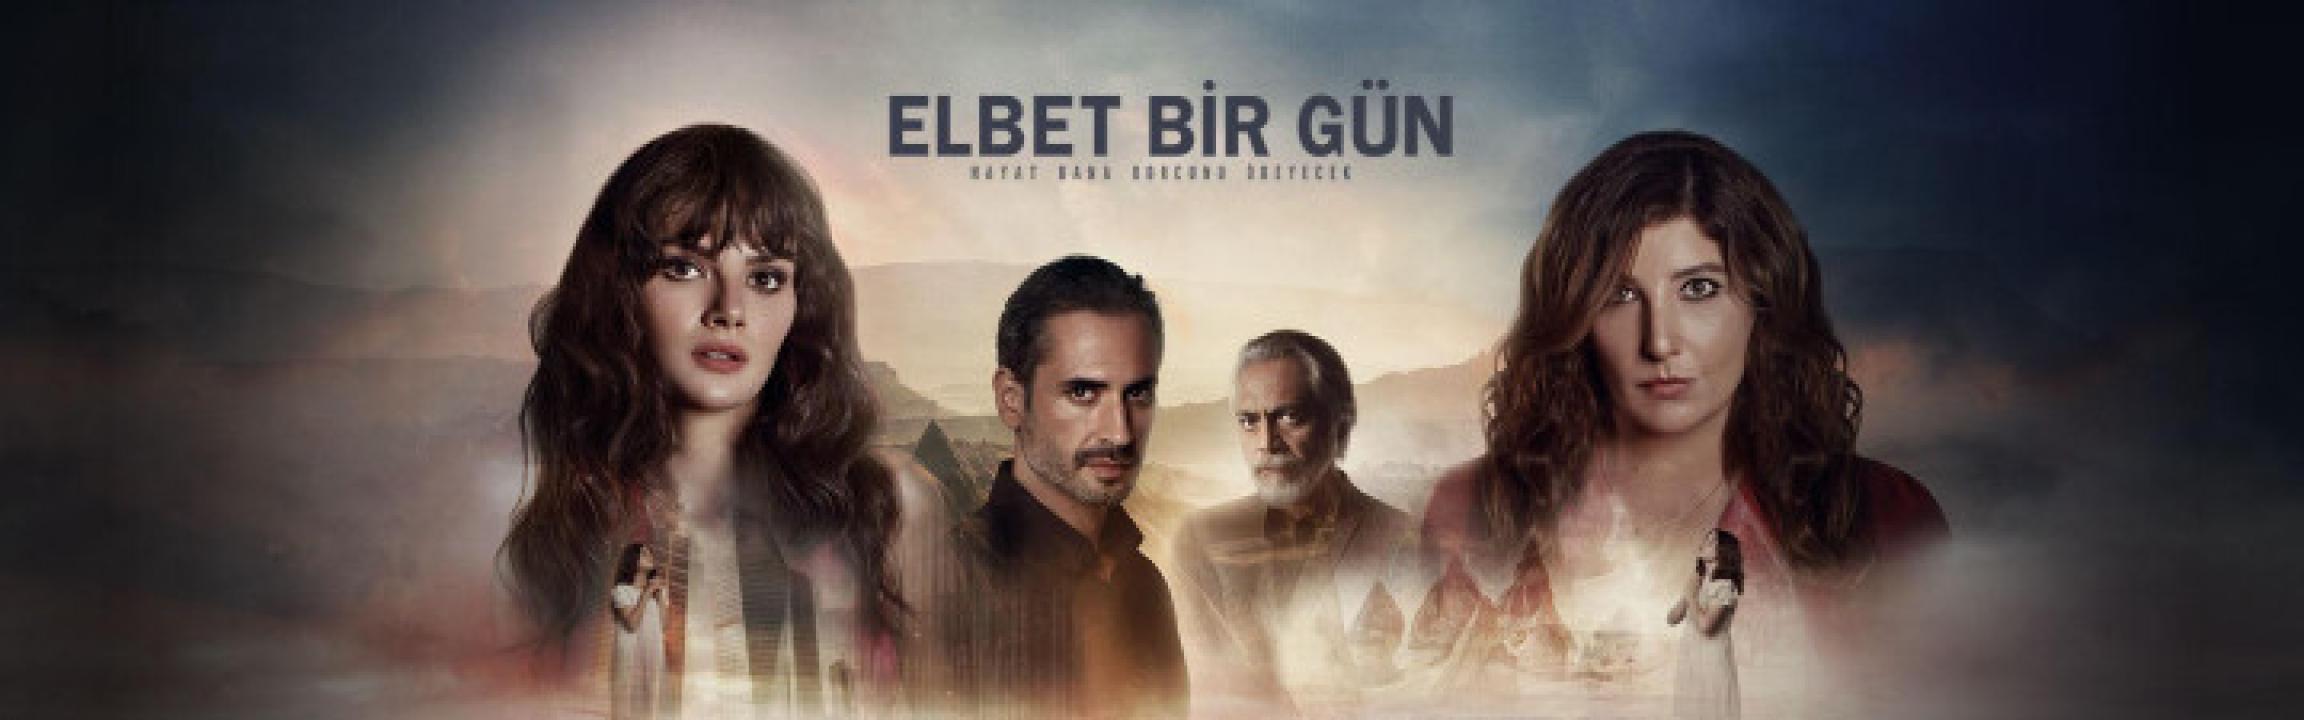 Elbet Bir Gun Episode 1 English Subtitles HD